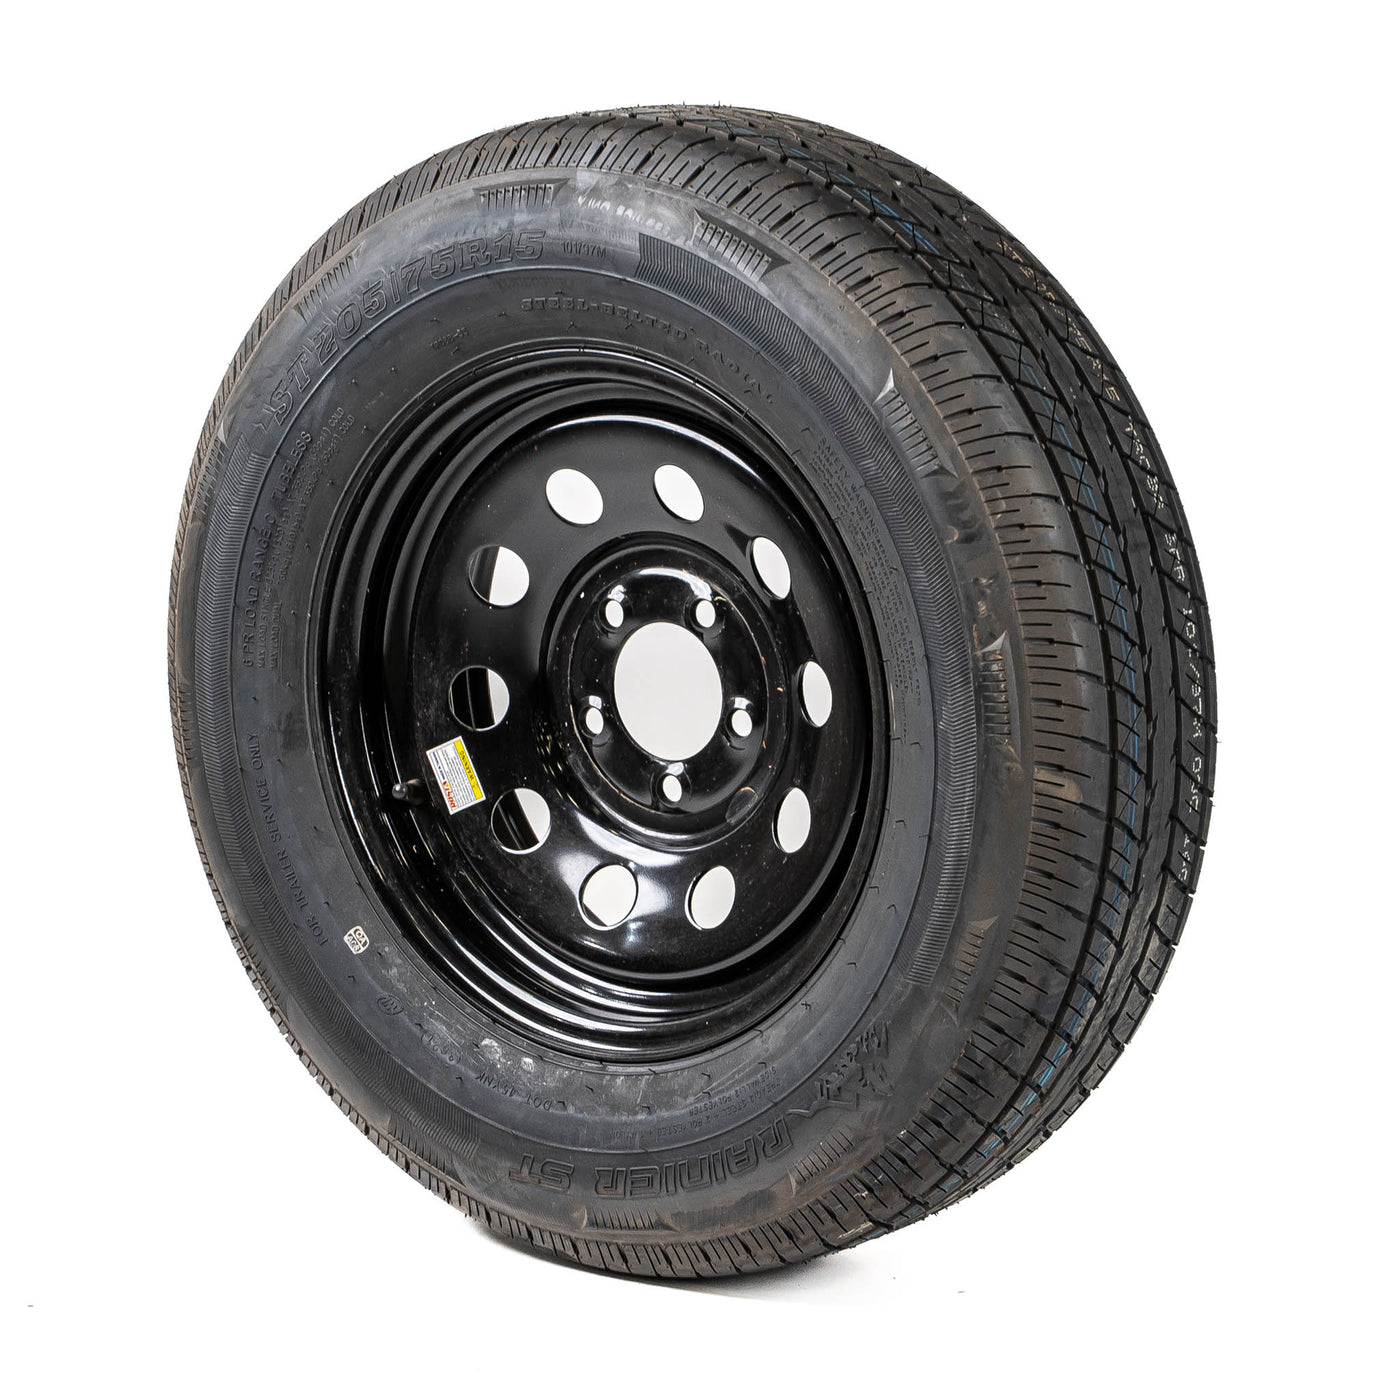 15″ Black Mod Rim and Radial Tire